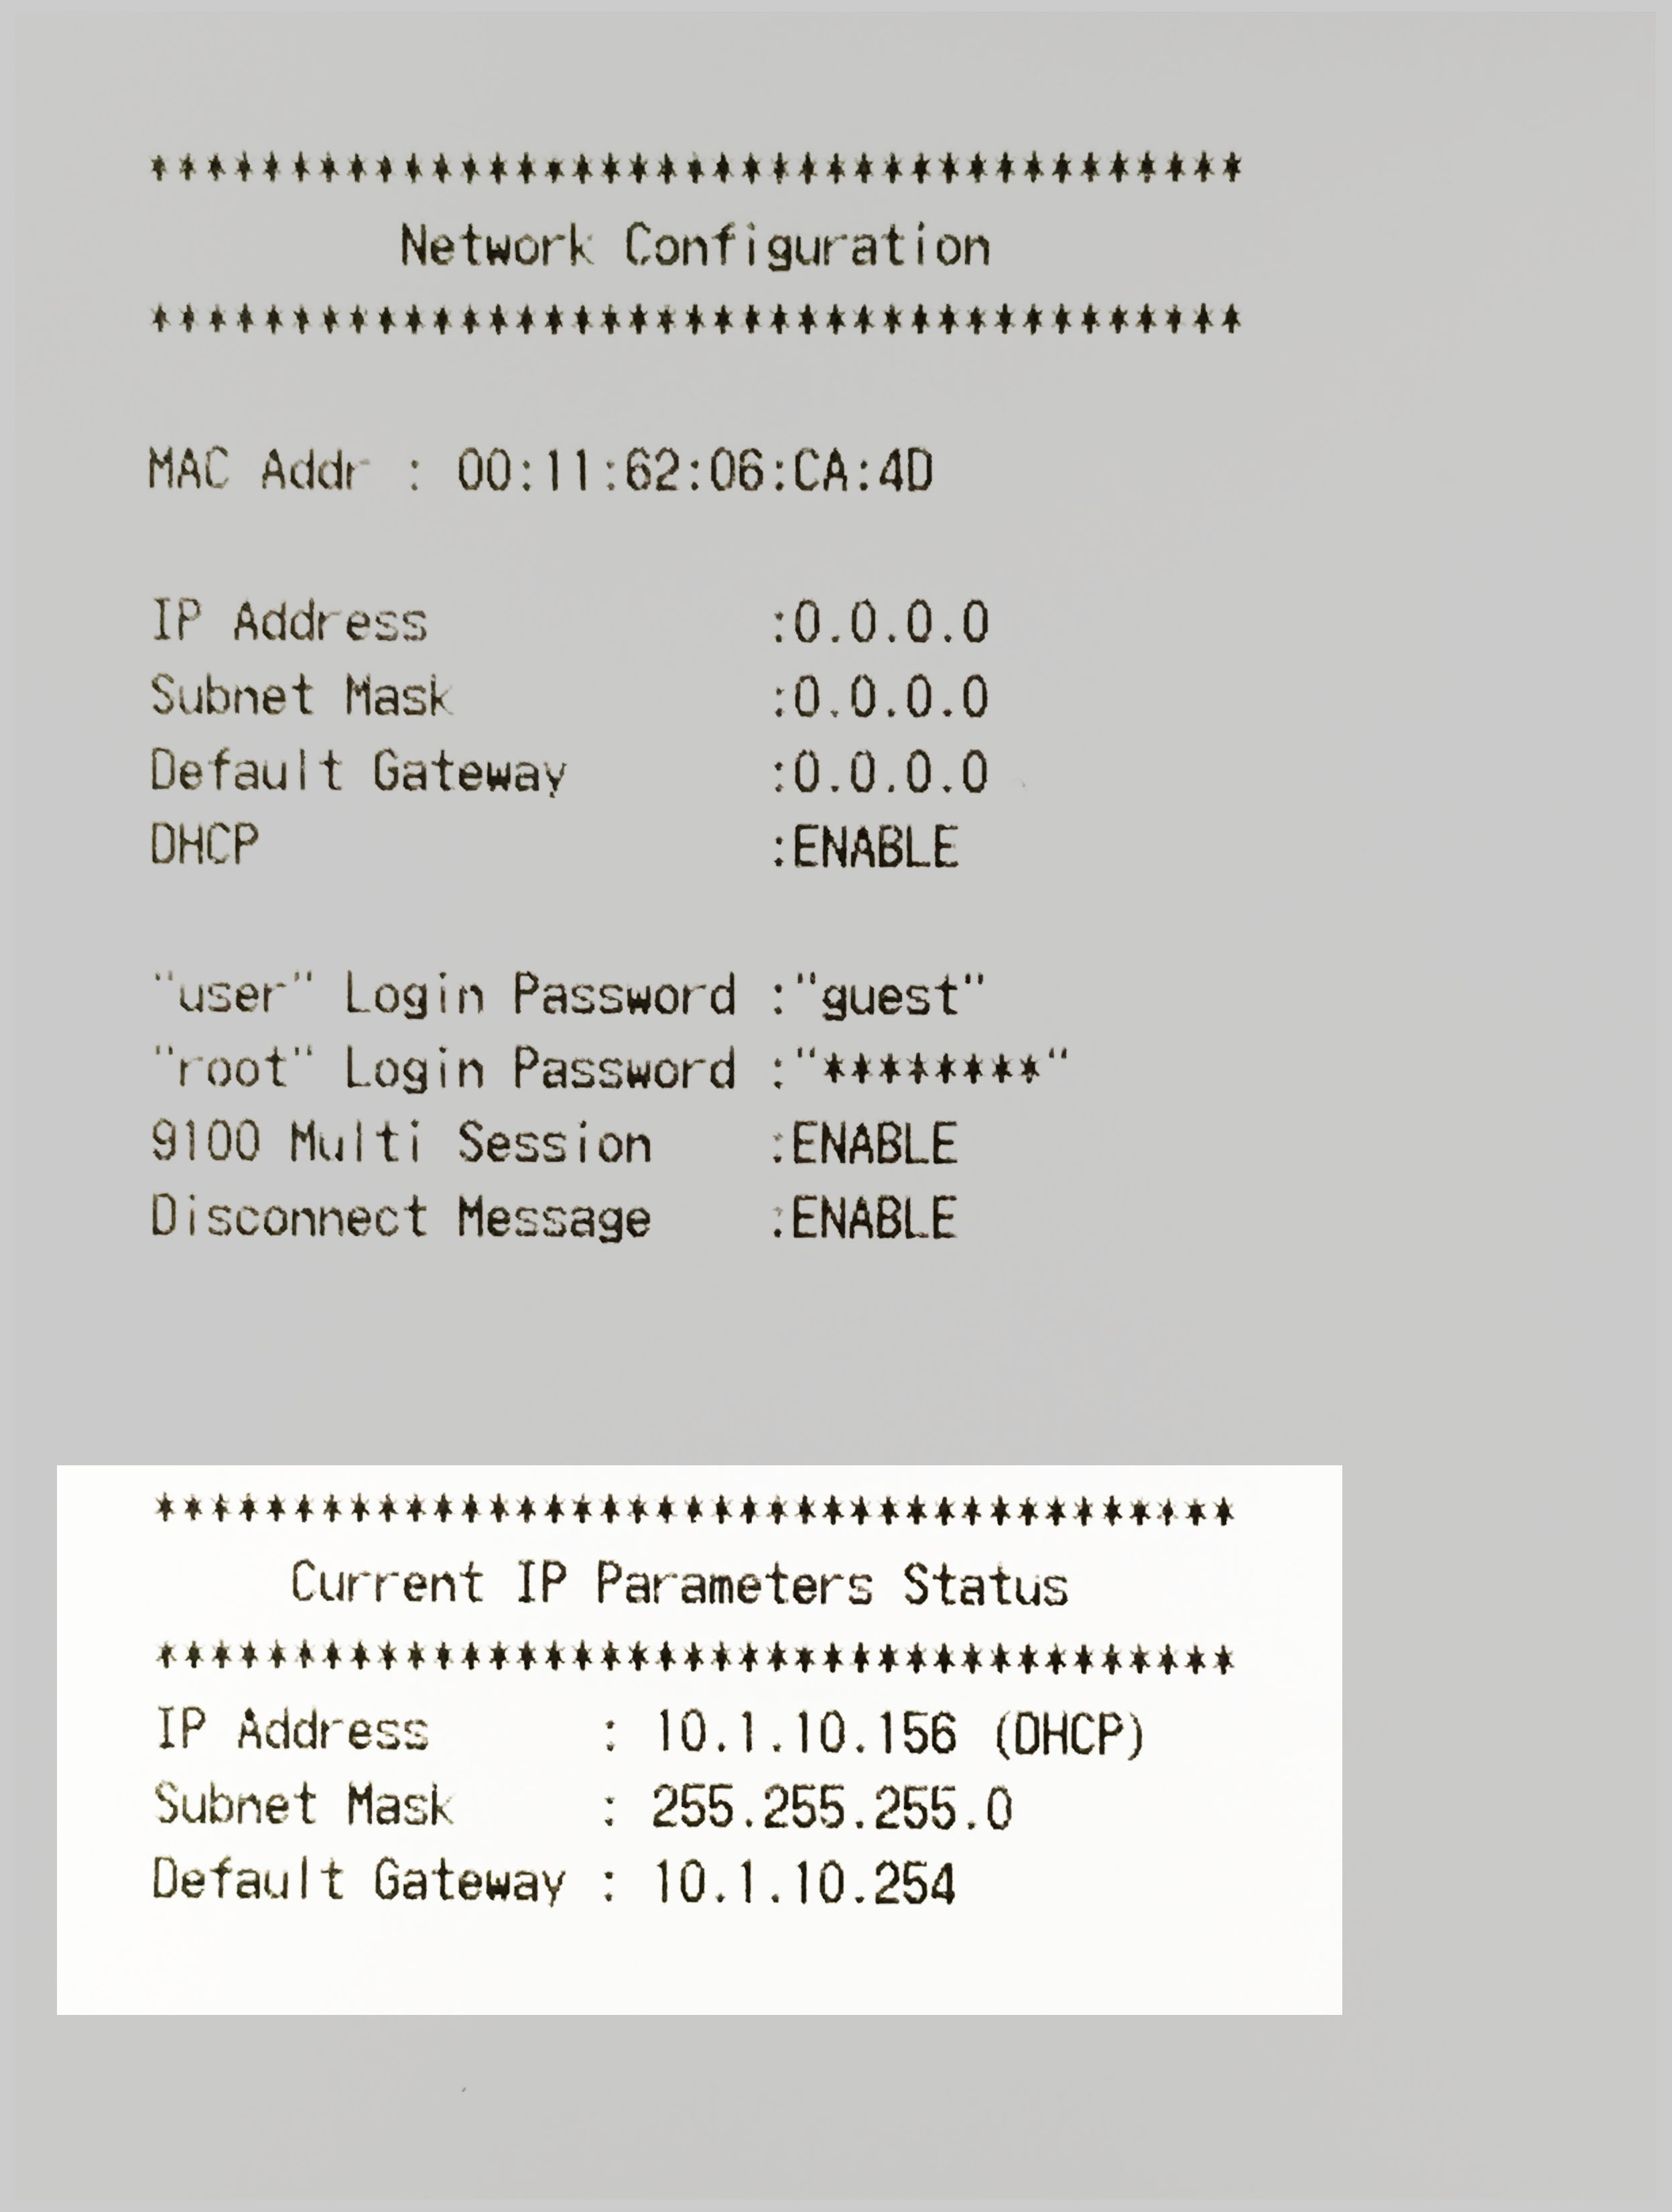 Star TSP IP address receipt